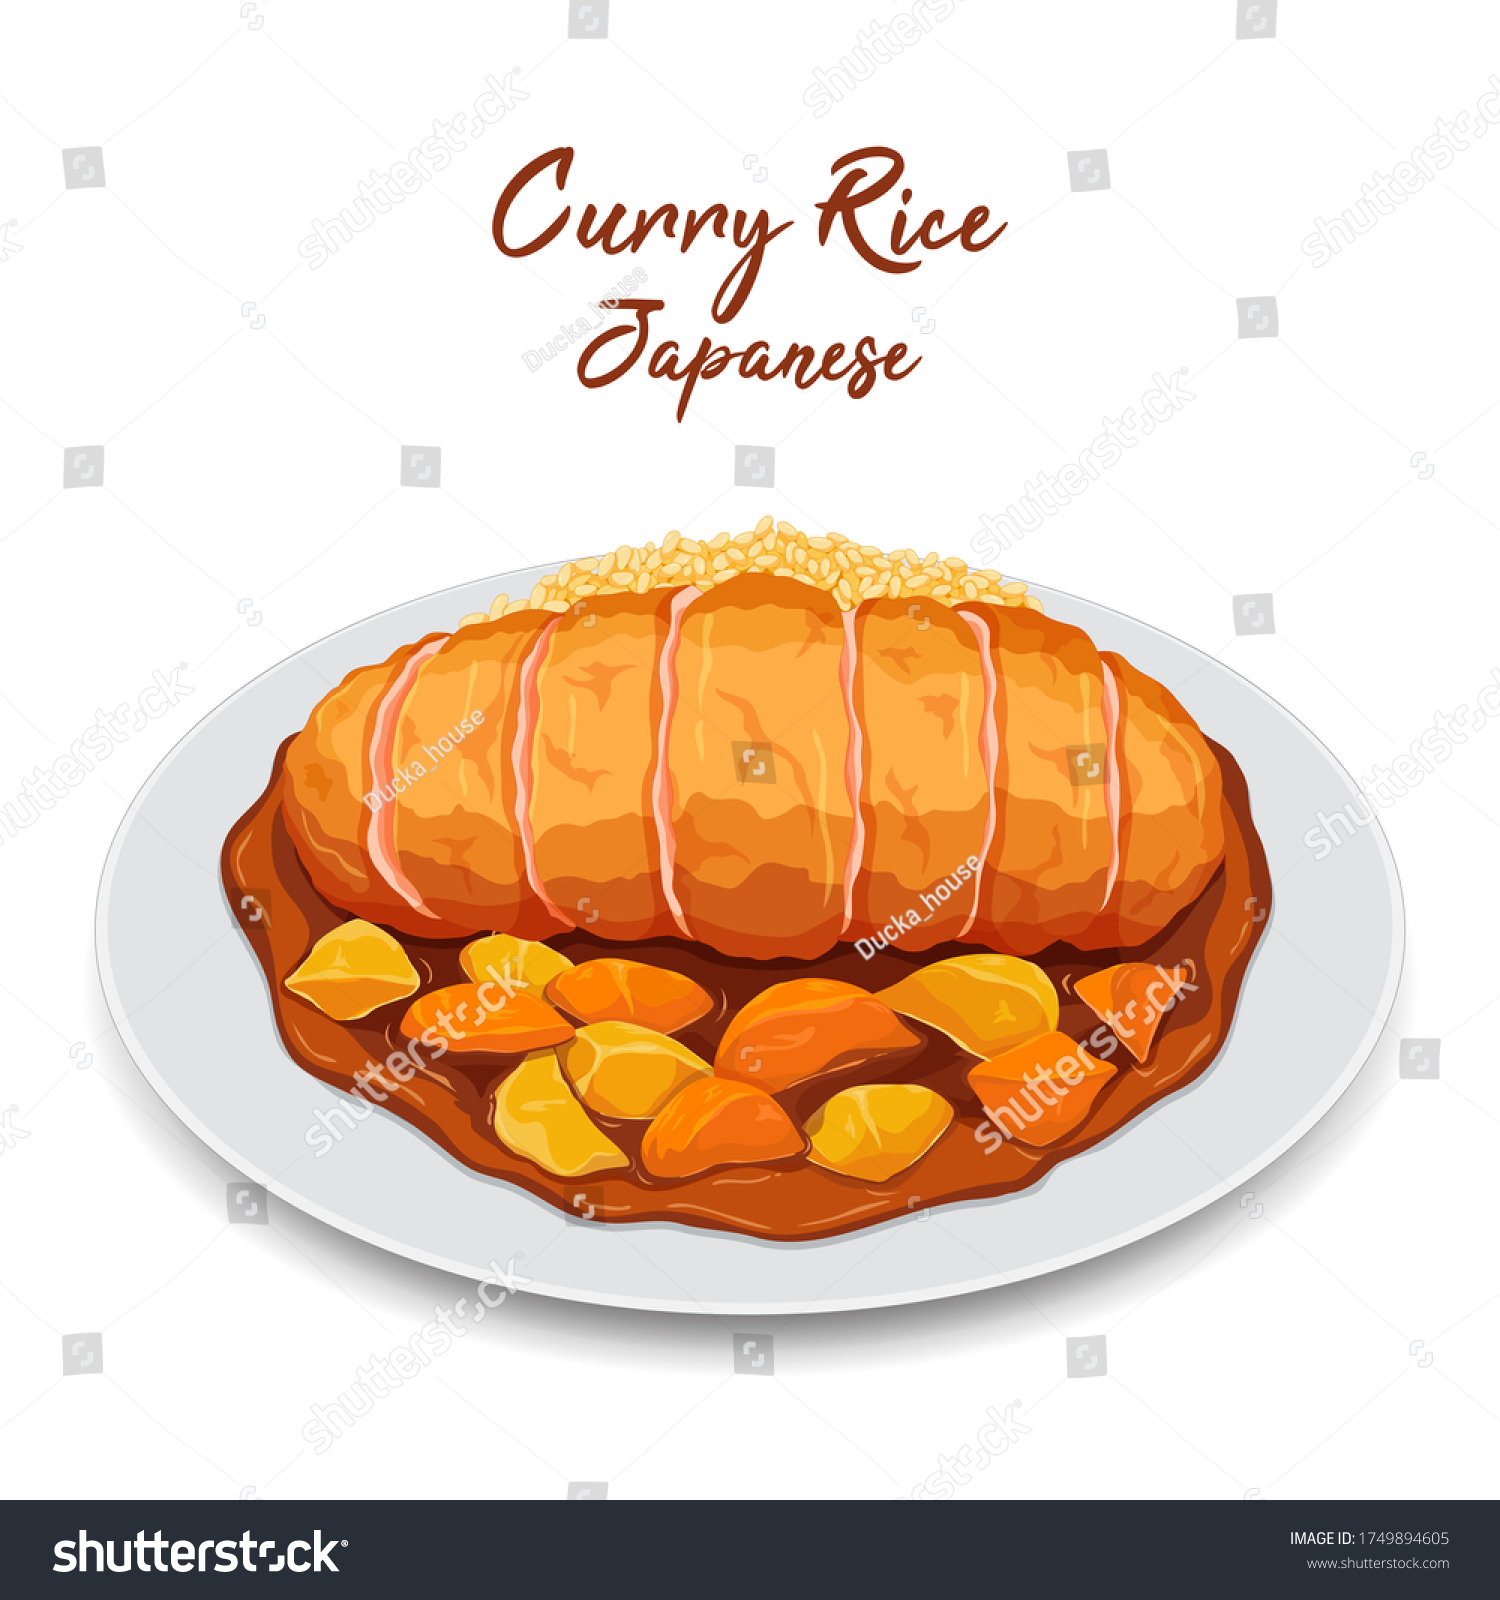 SVG of Japanese Tonkatsu Curry Rice Illustration. 
(Japanese Curry Rice with Pork Cutlet)  svg